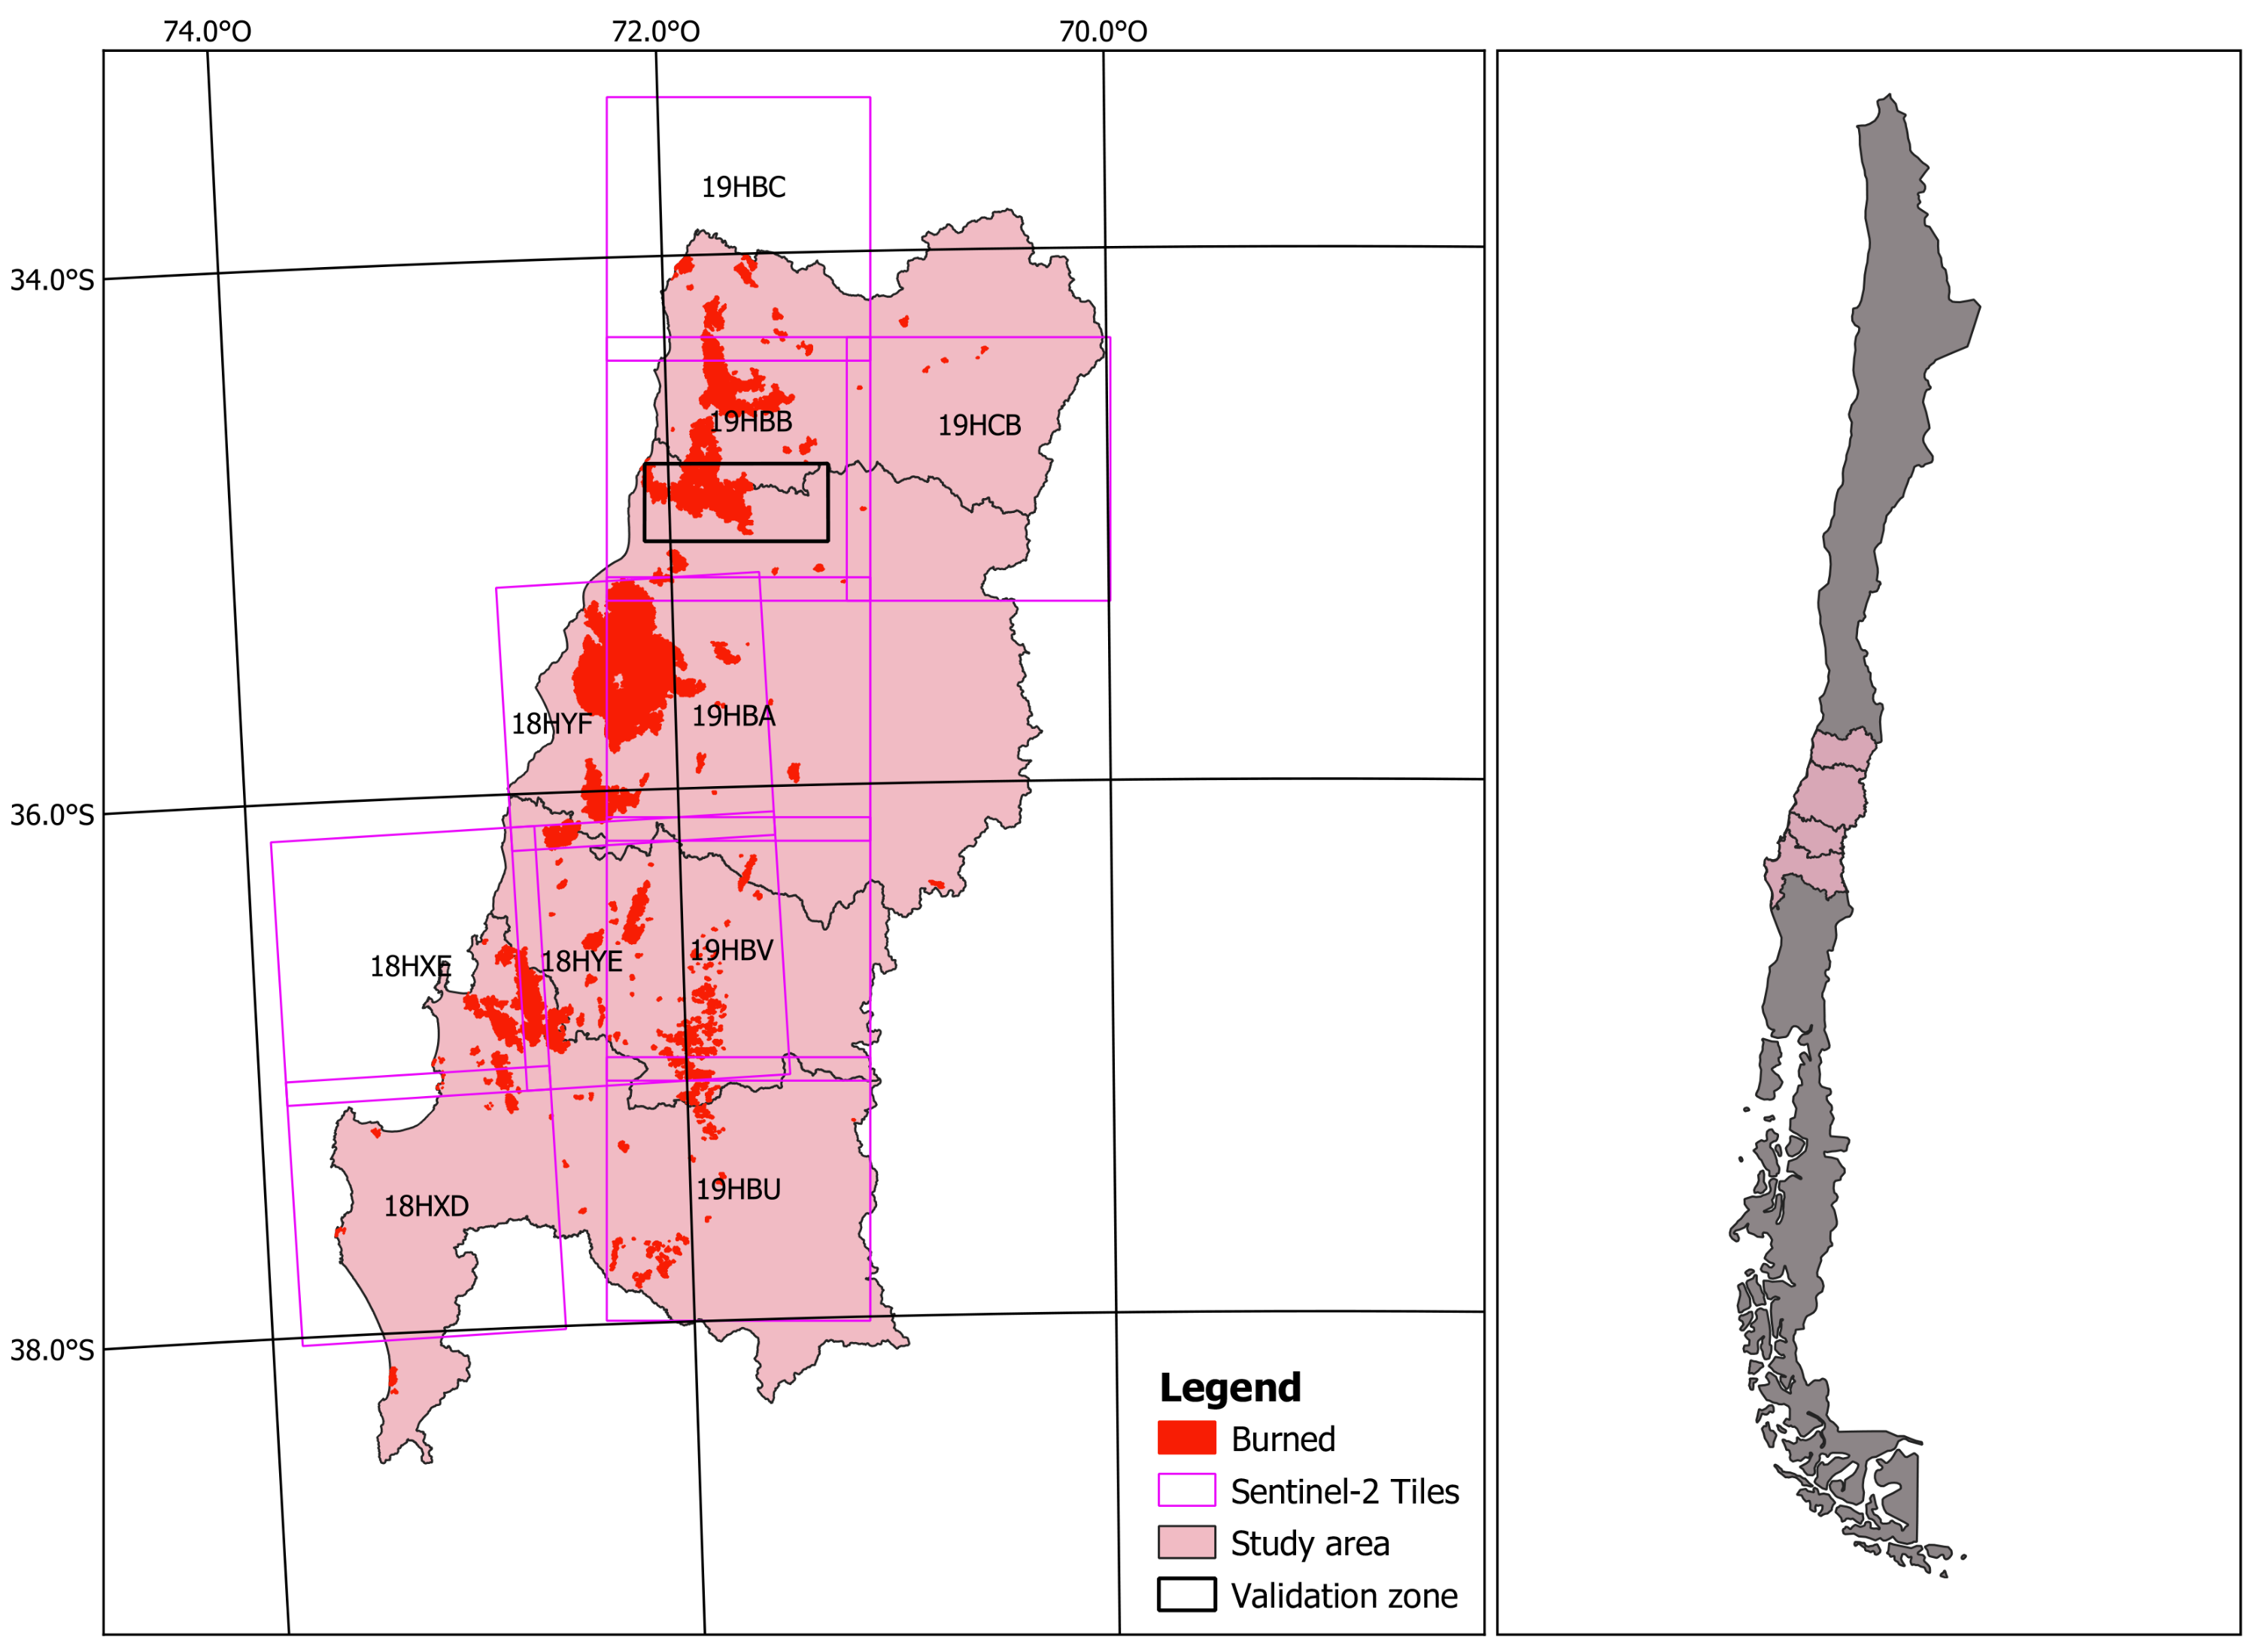 Regiones Geográficas de Argentina online exercise for